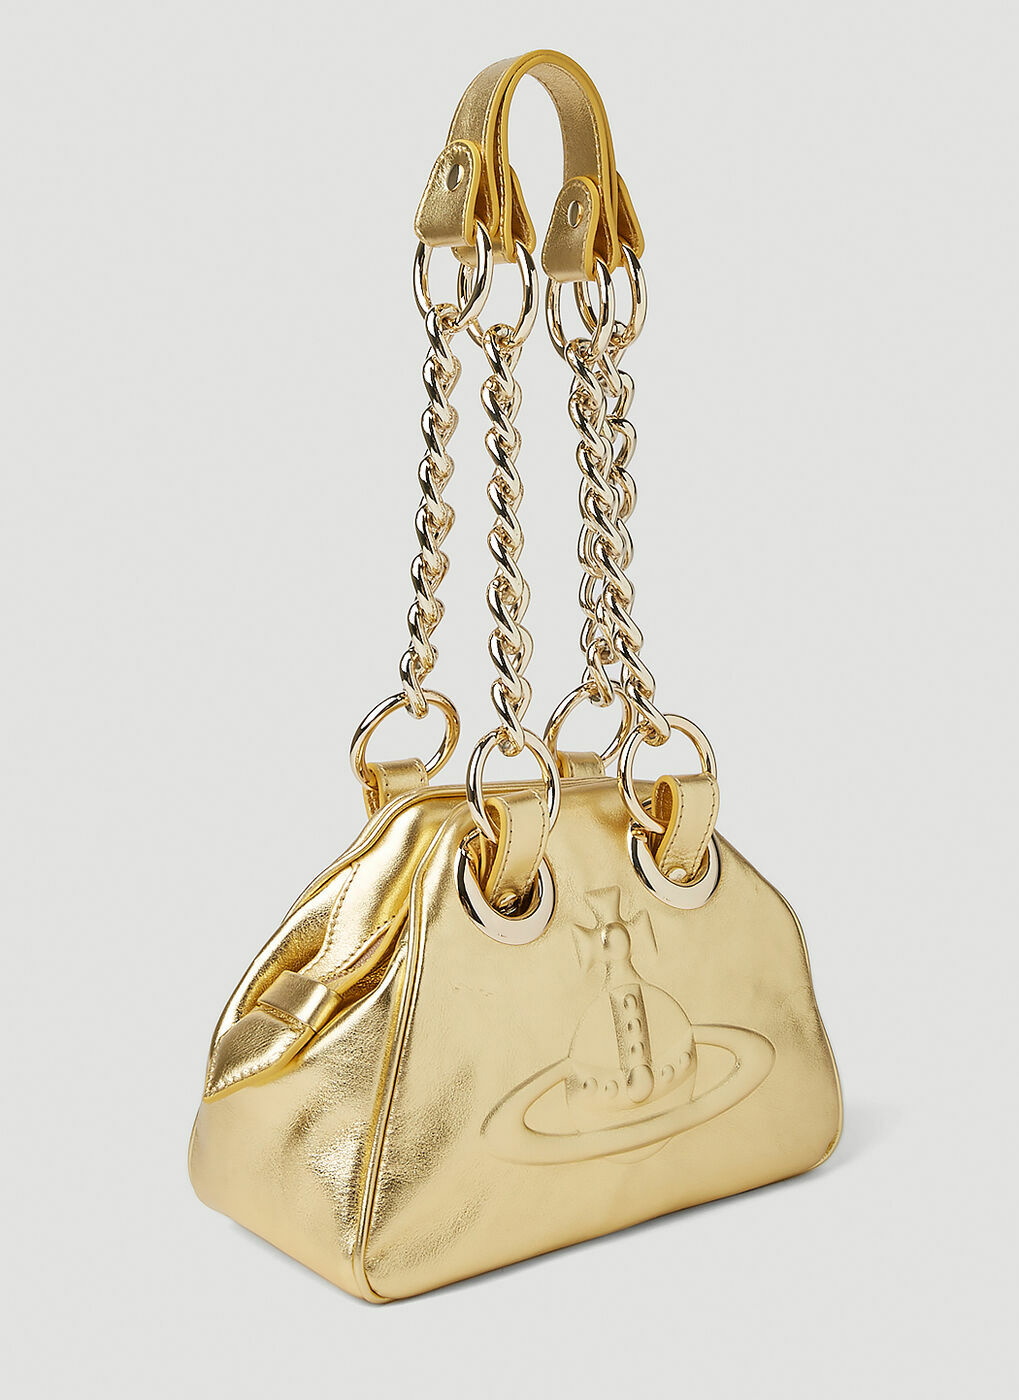 Vivienne Westwood - Archive Orb Chain Shoulder Bag in Gold 